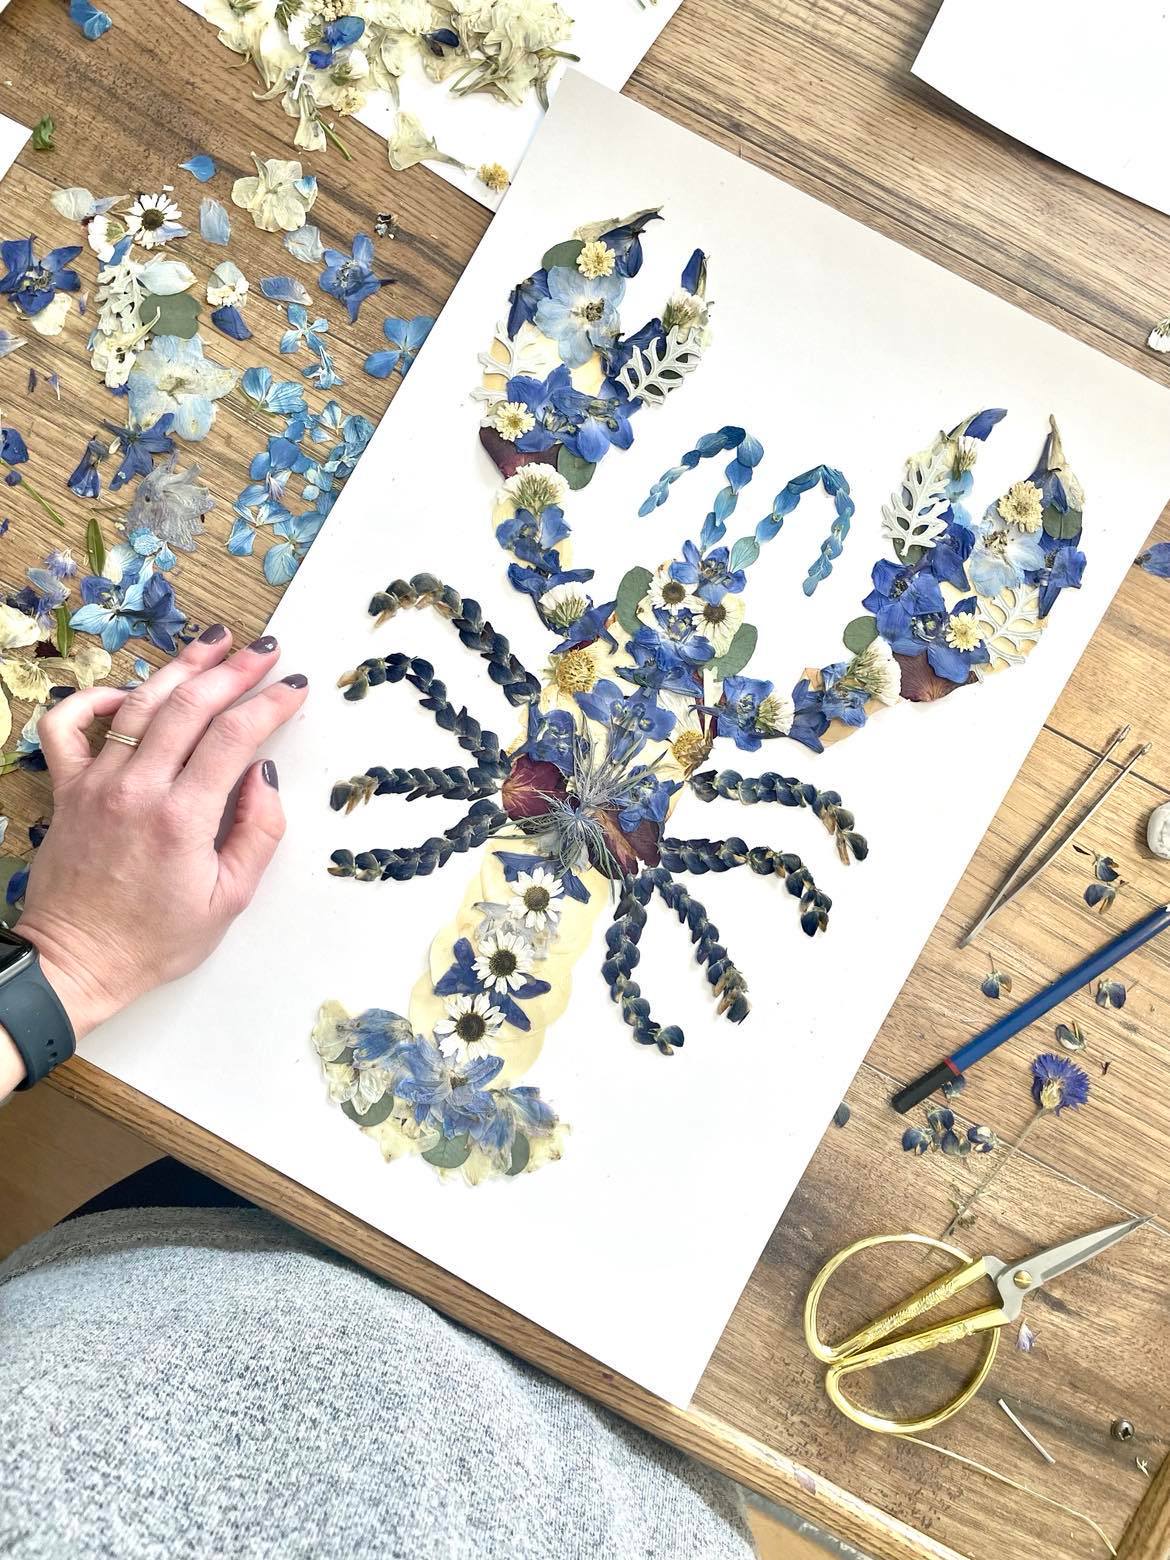 pretty Blue lobster artwork artistic design made with pressed flowers nova scotia lobster